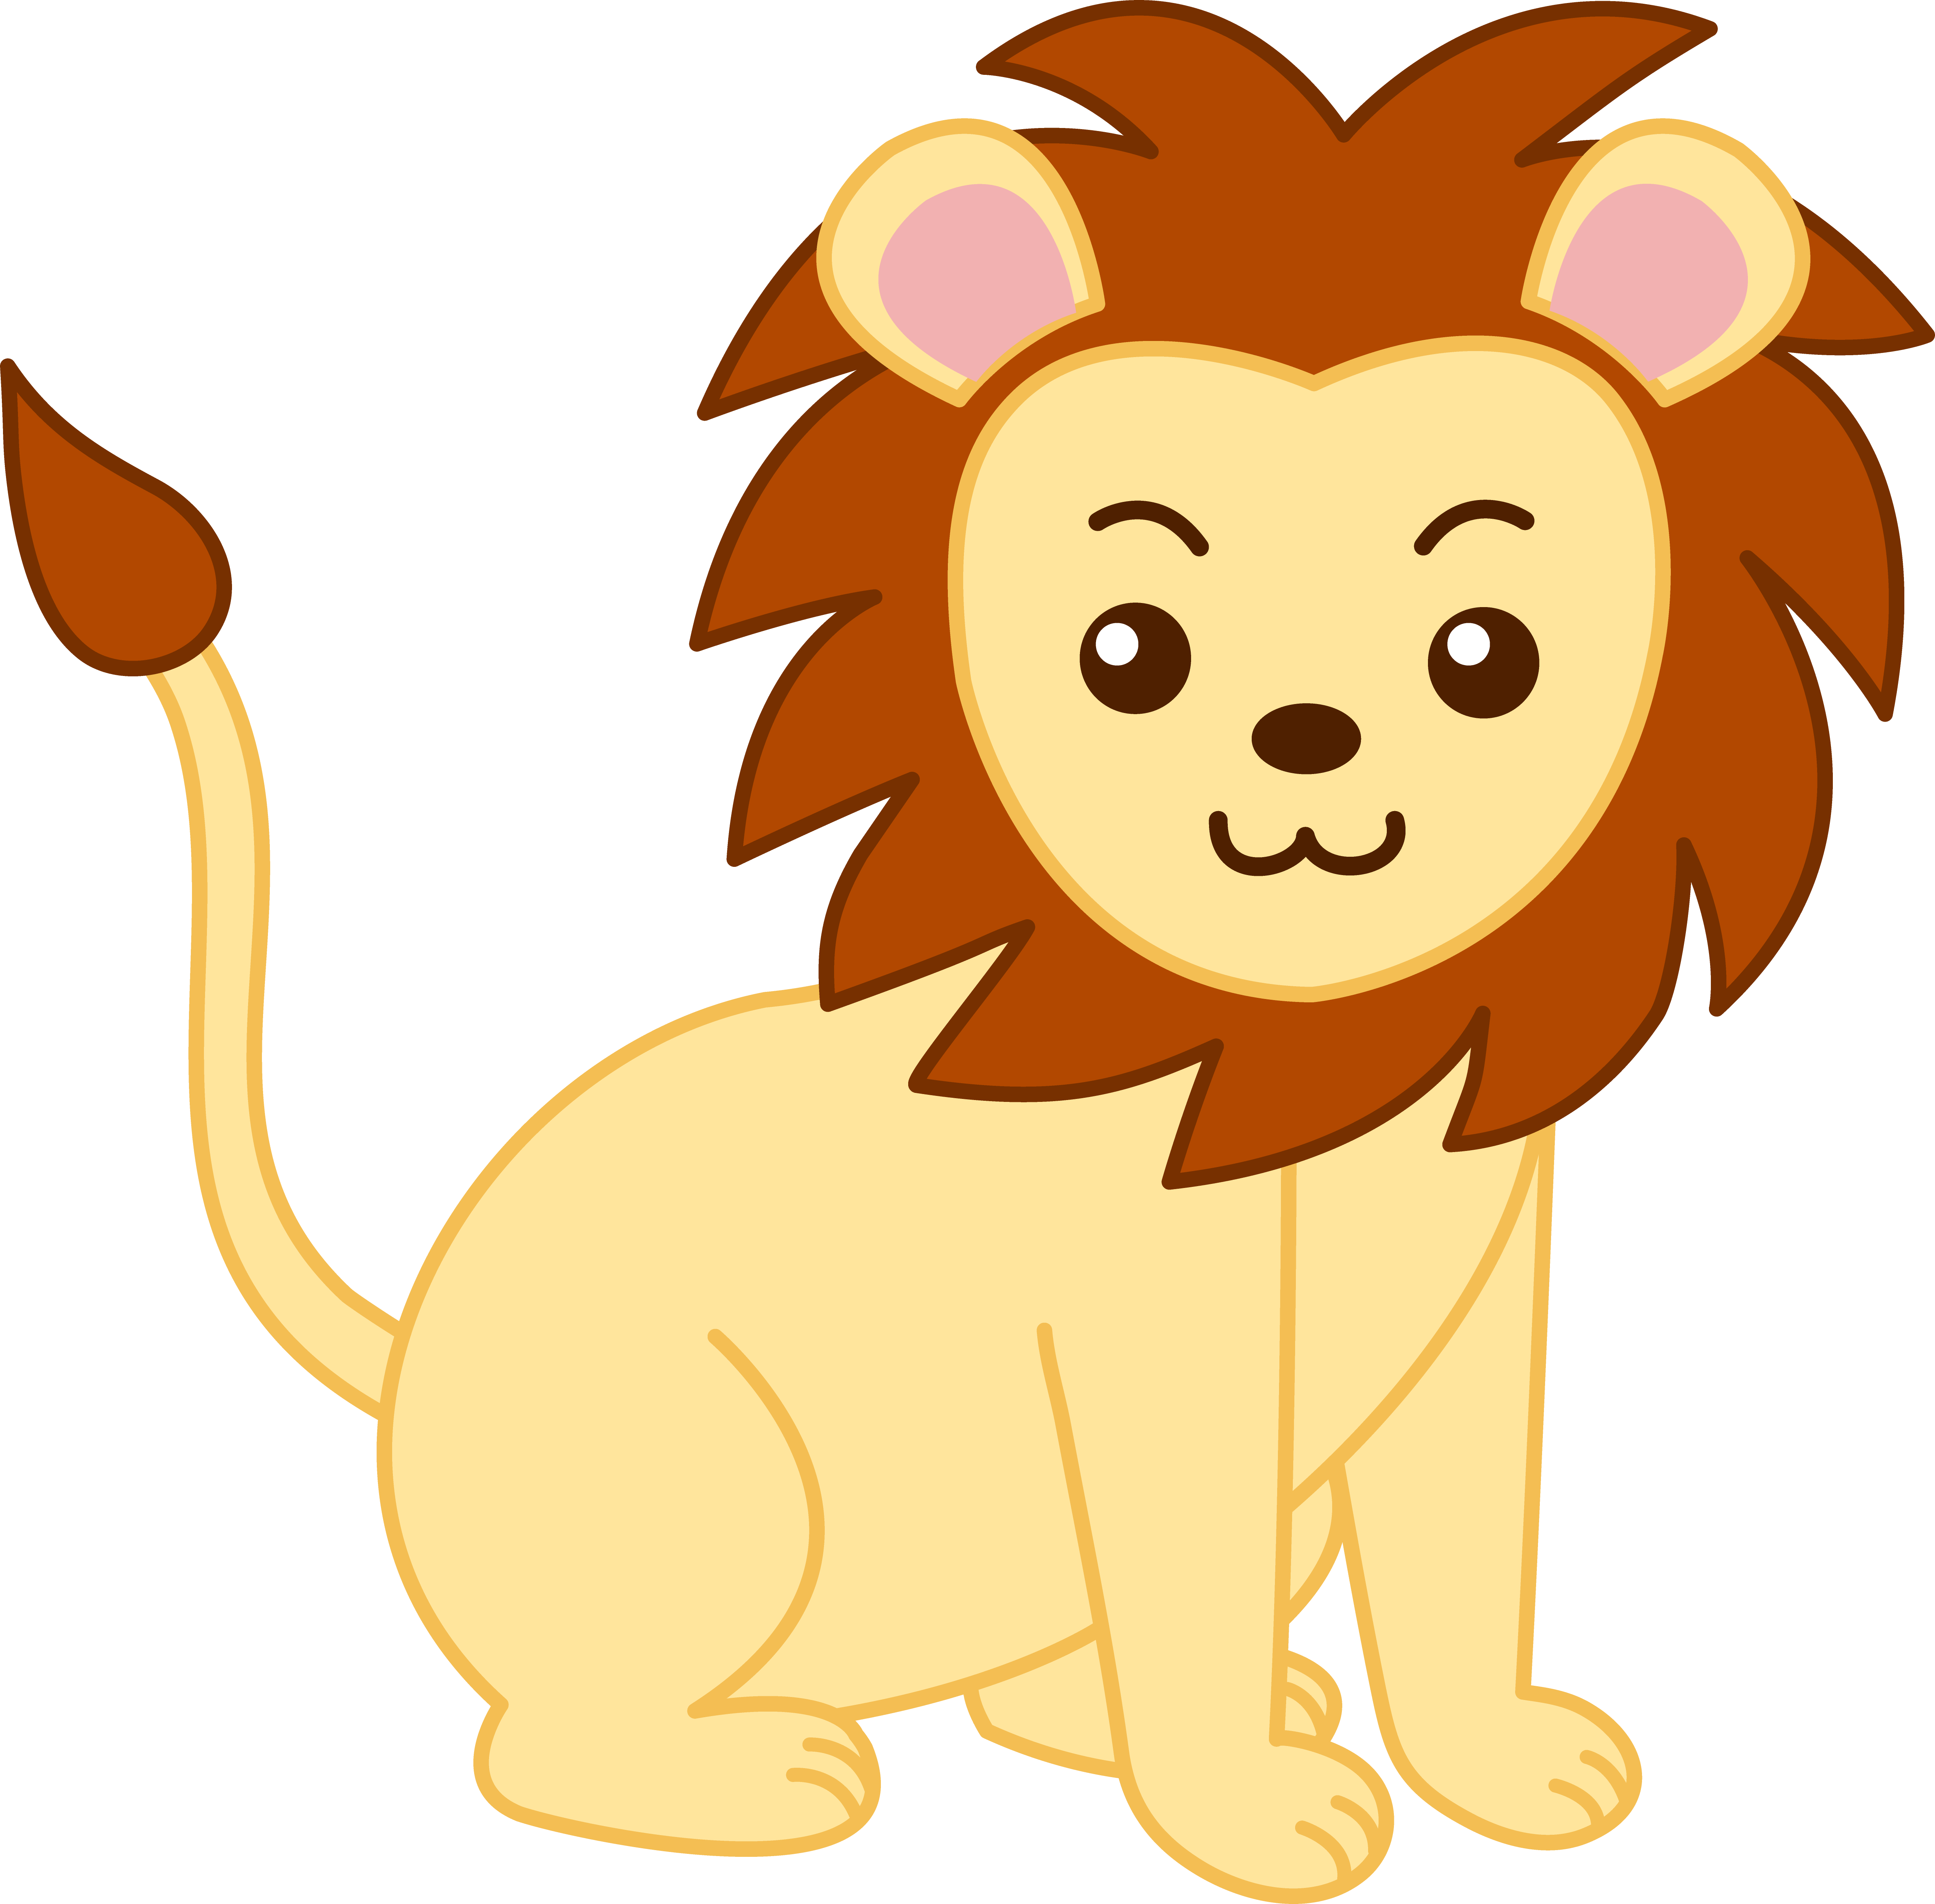 Cartoon lion clipart